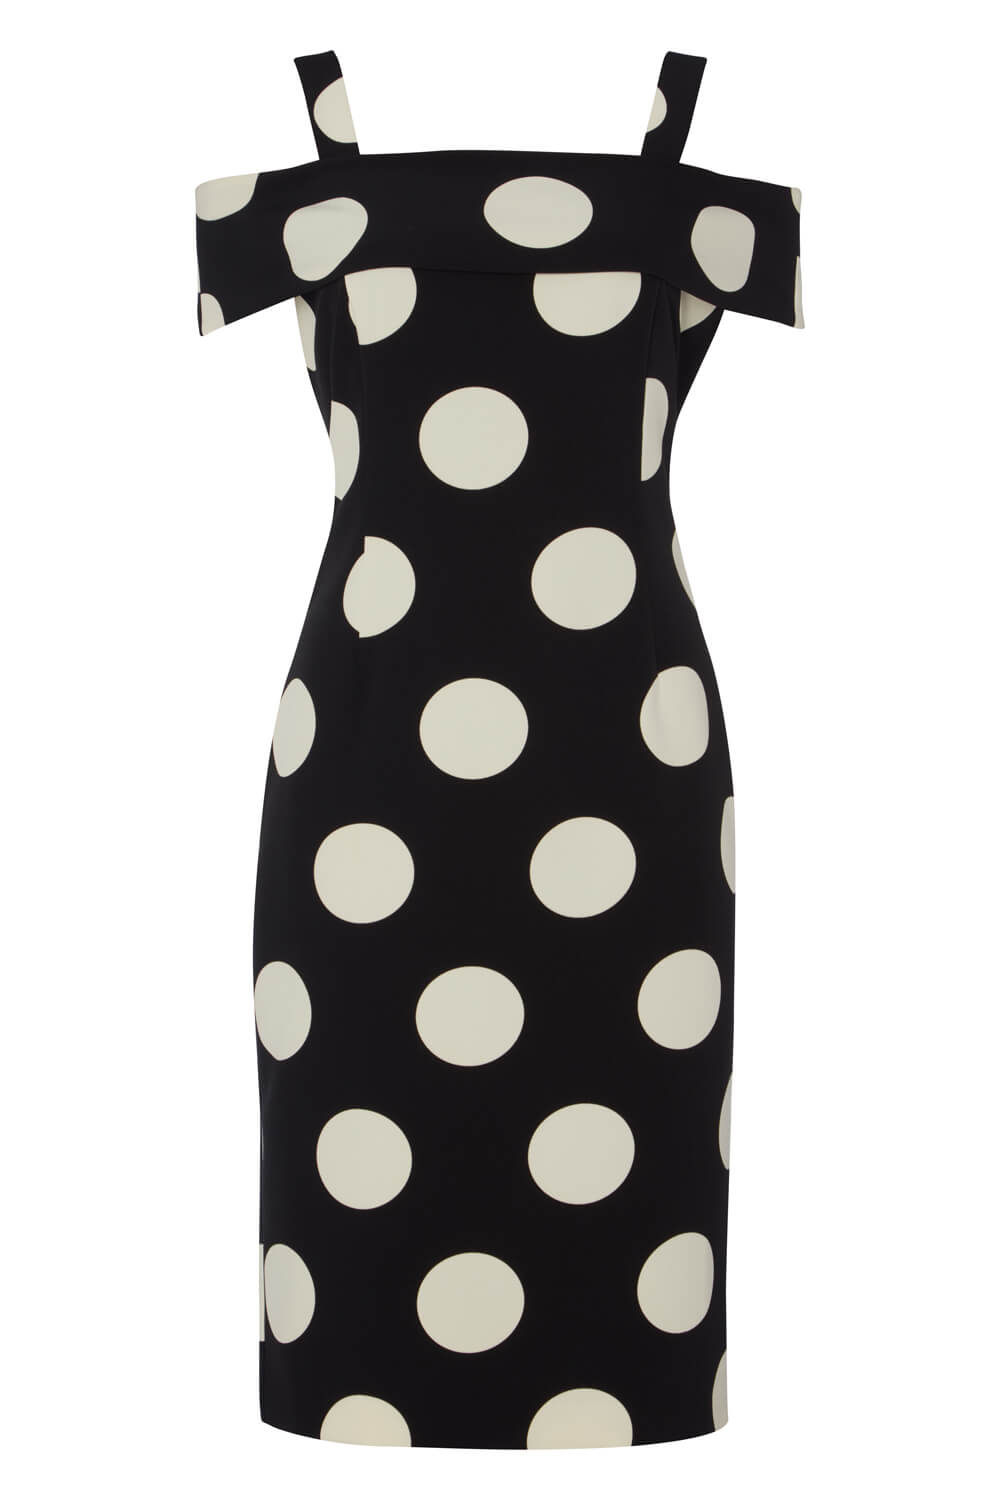 Black Polka Dot Bardot Dress, Image 6 of 6